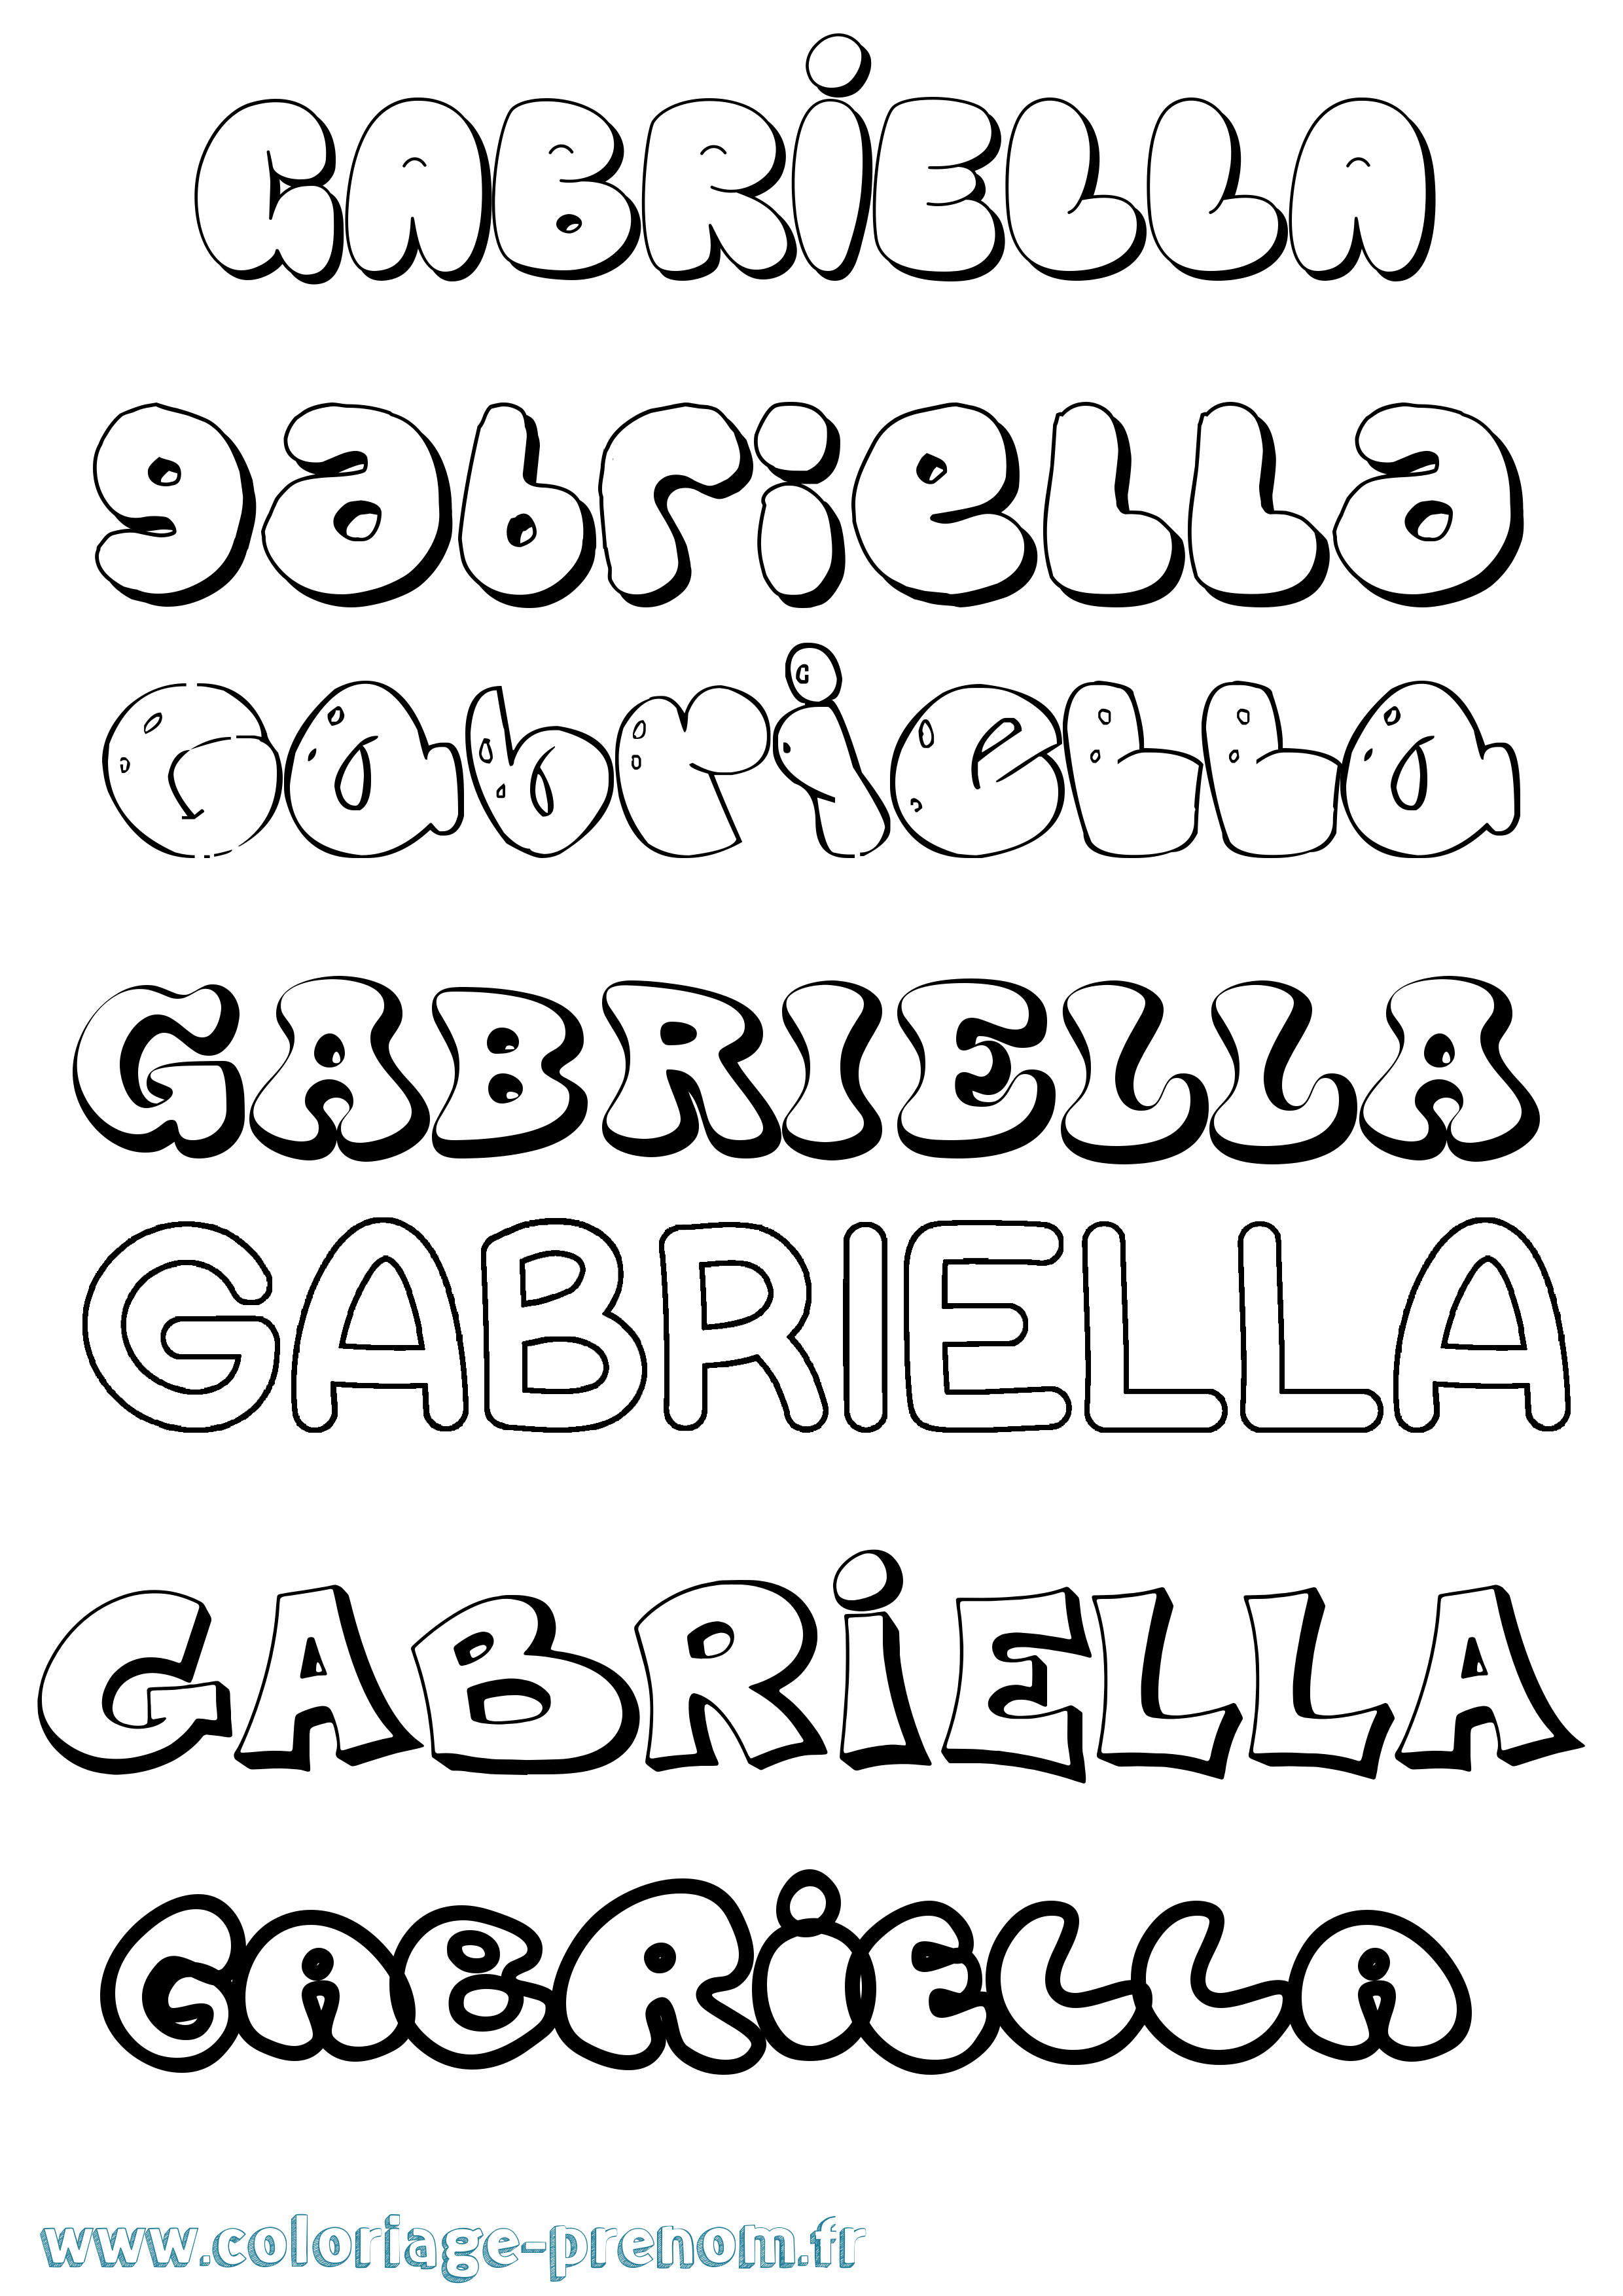 Coloriage prénom Gabriella